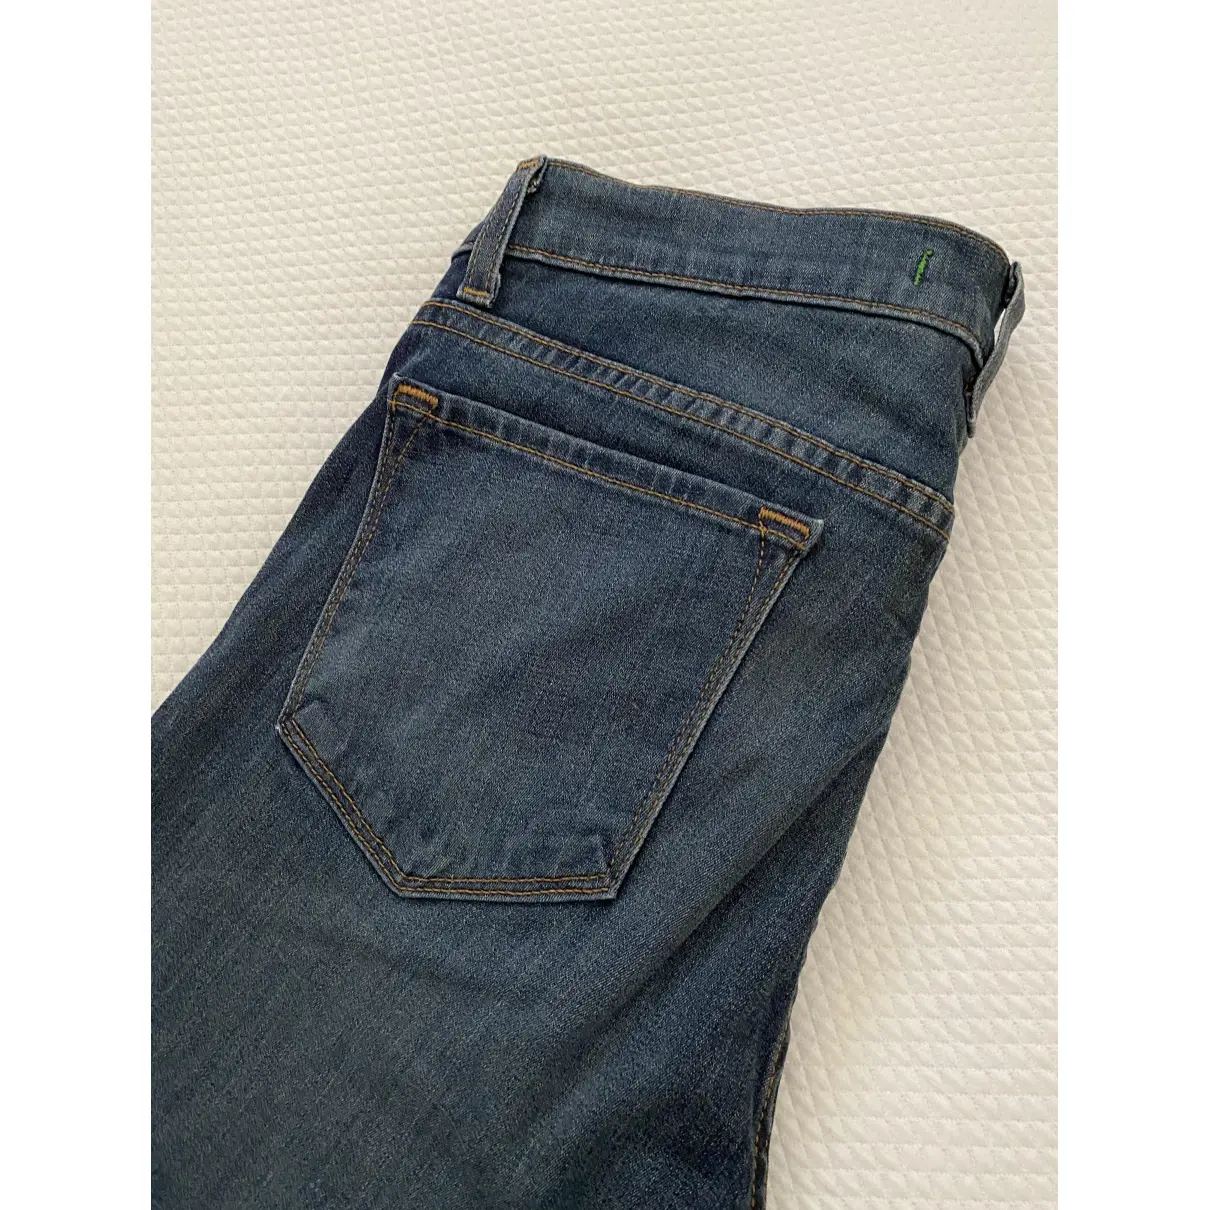 Buy J Brand Blue Denim - Jeans Jeans online